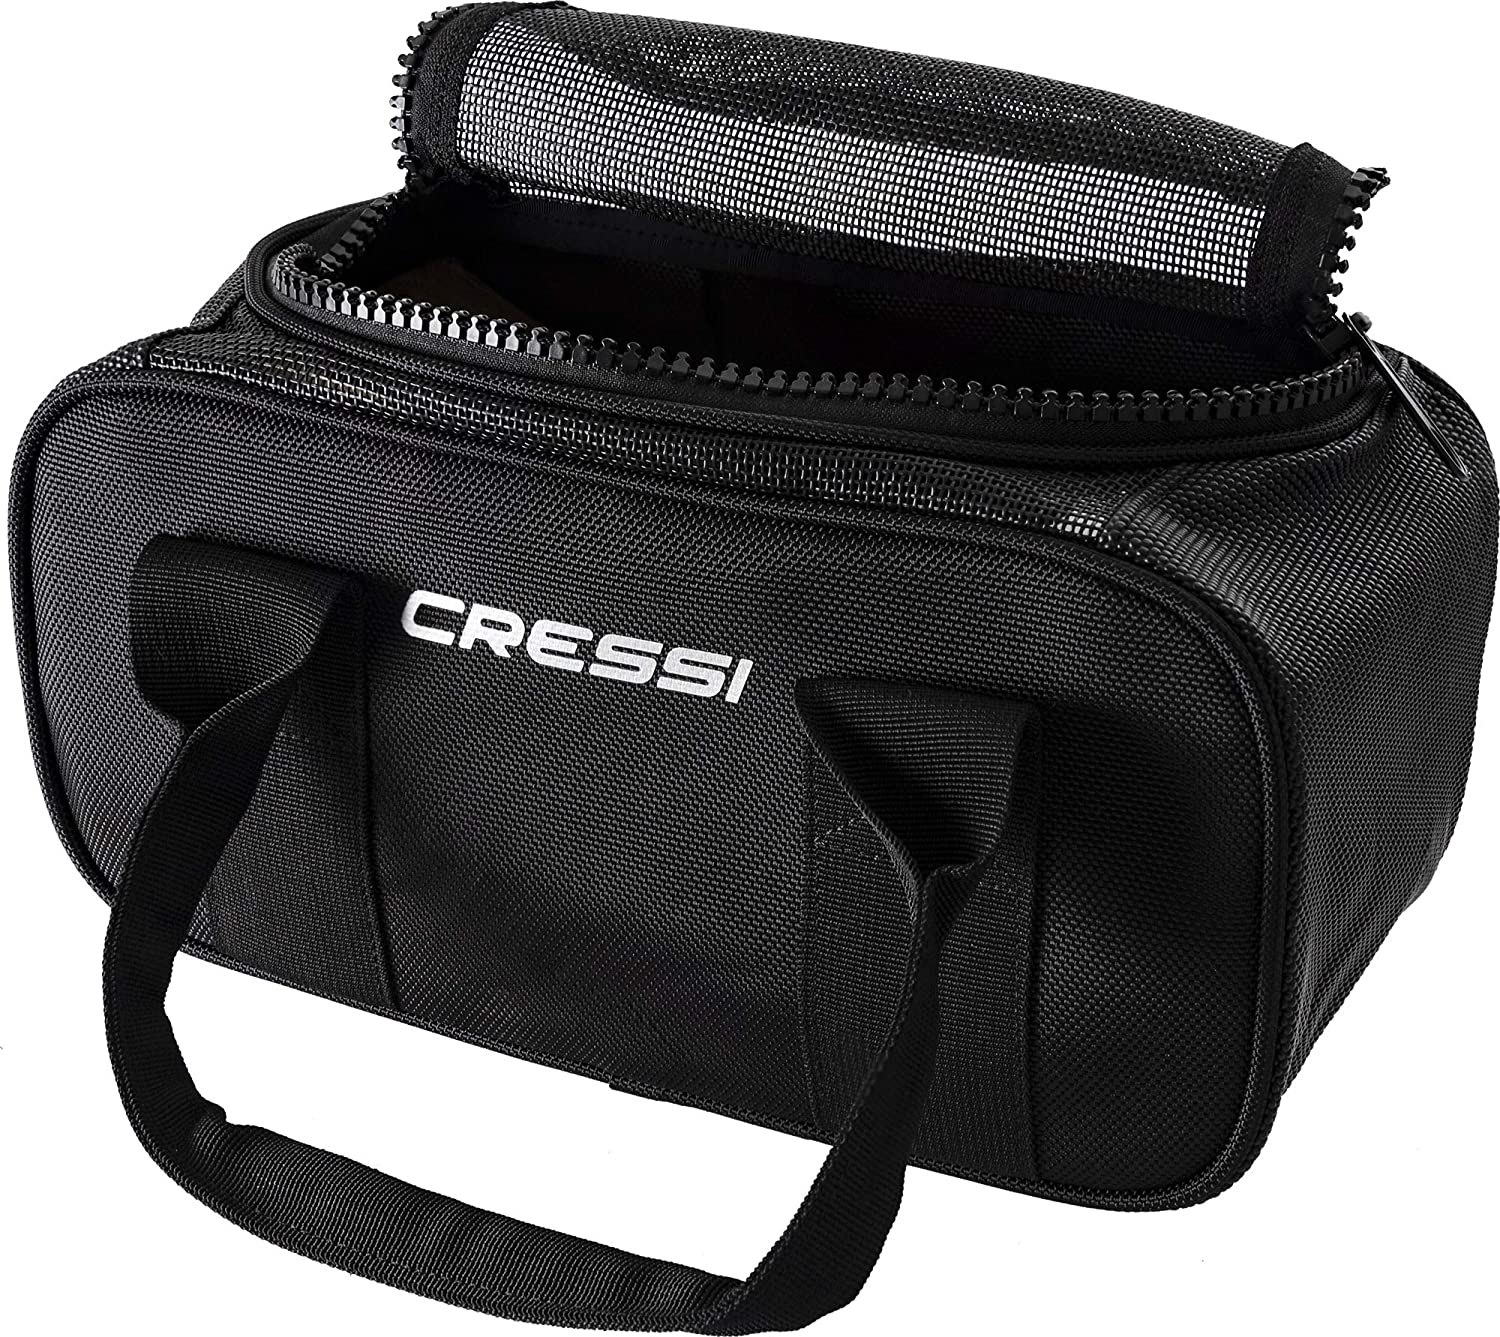 Cressi Ballast Weight Bag